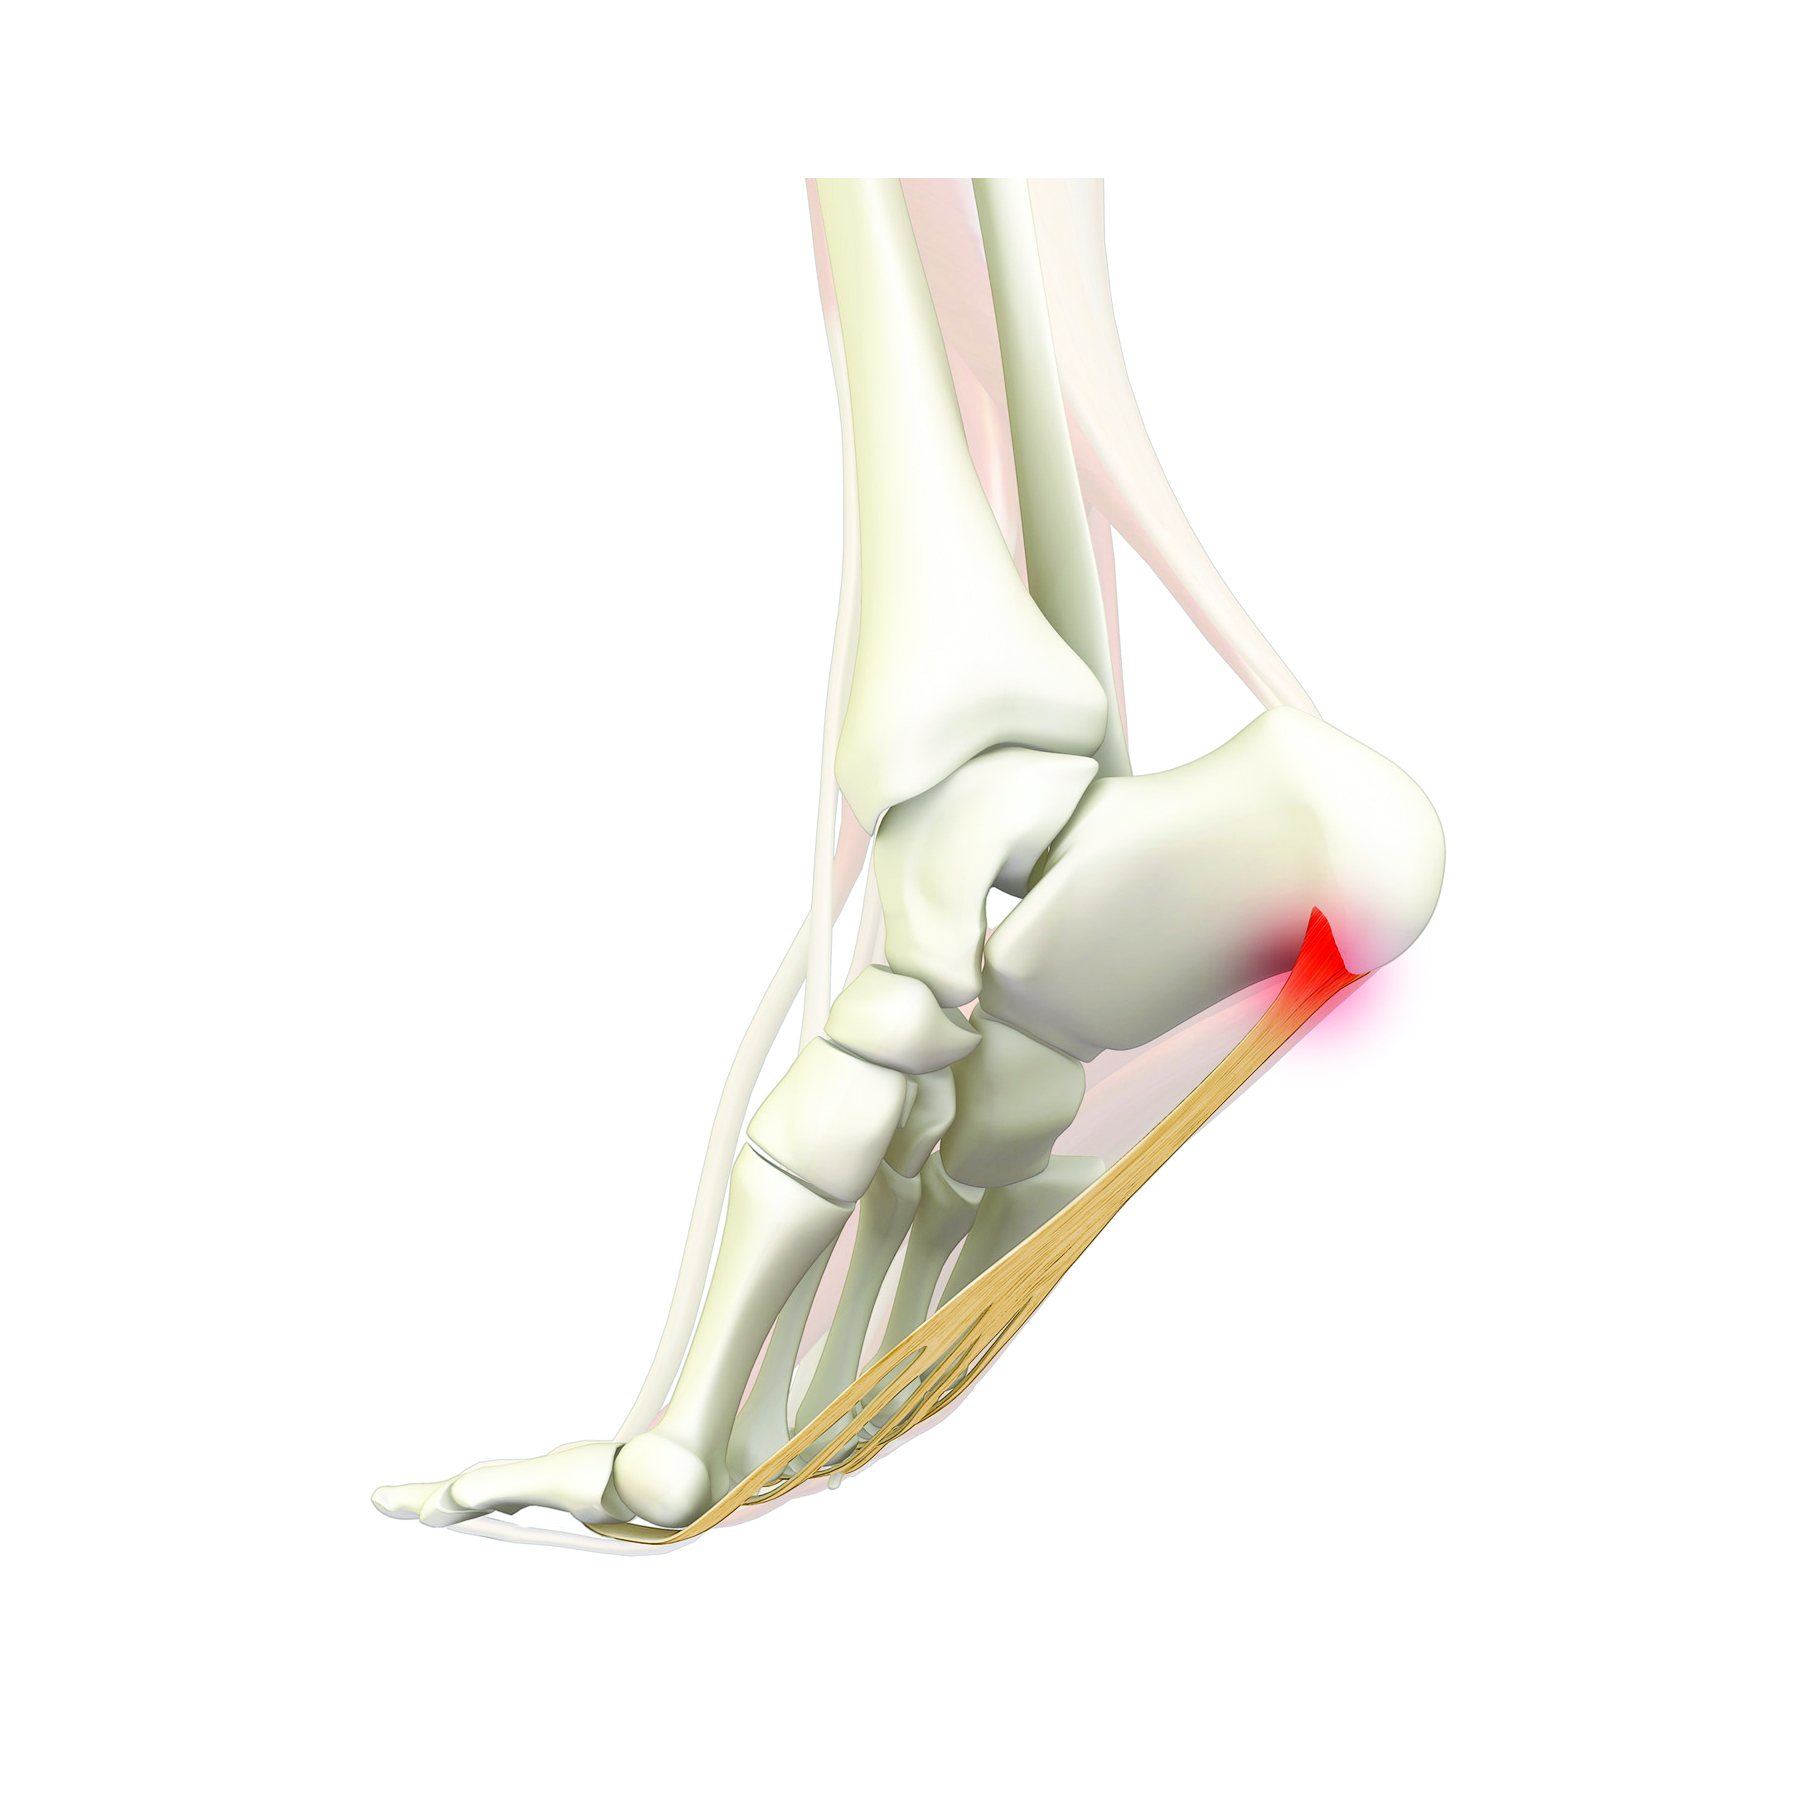 anatomy-structure-foot-heel-pain